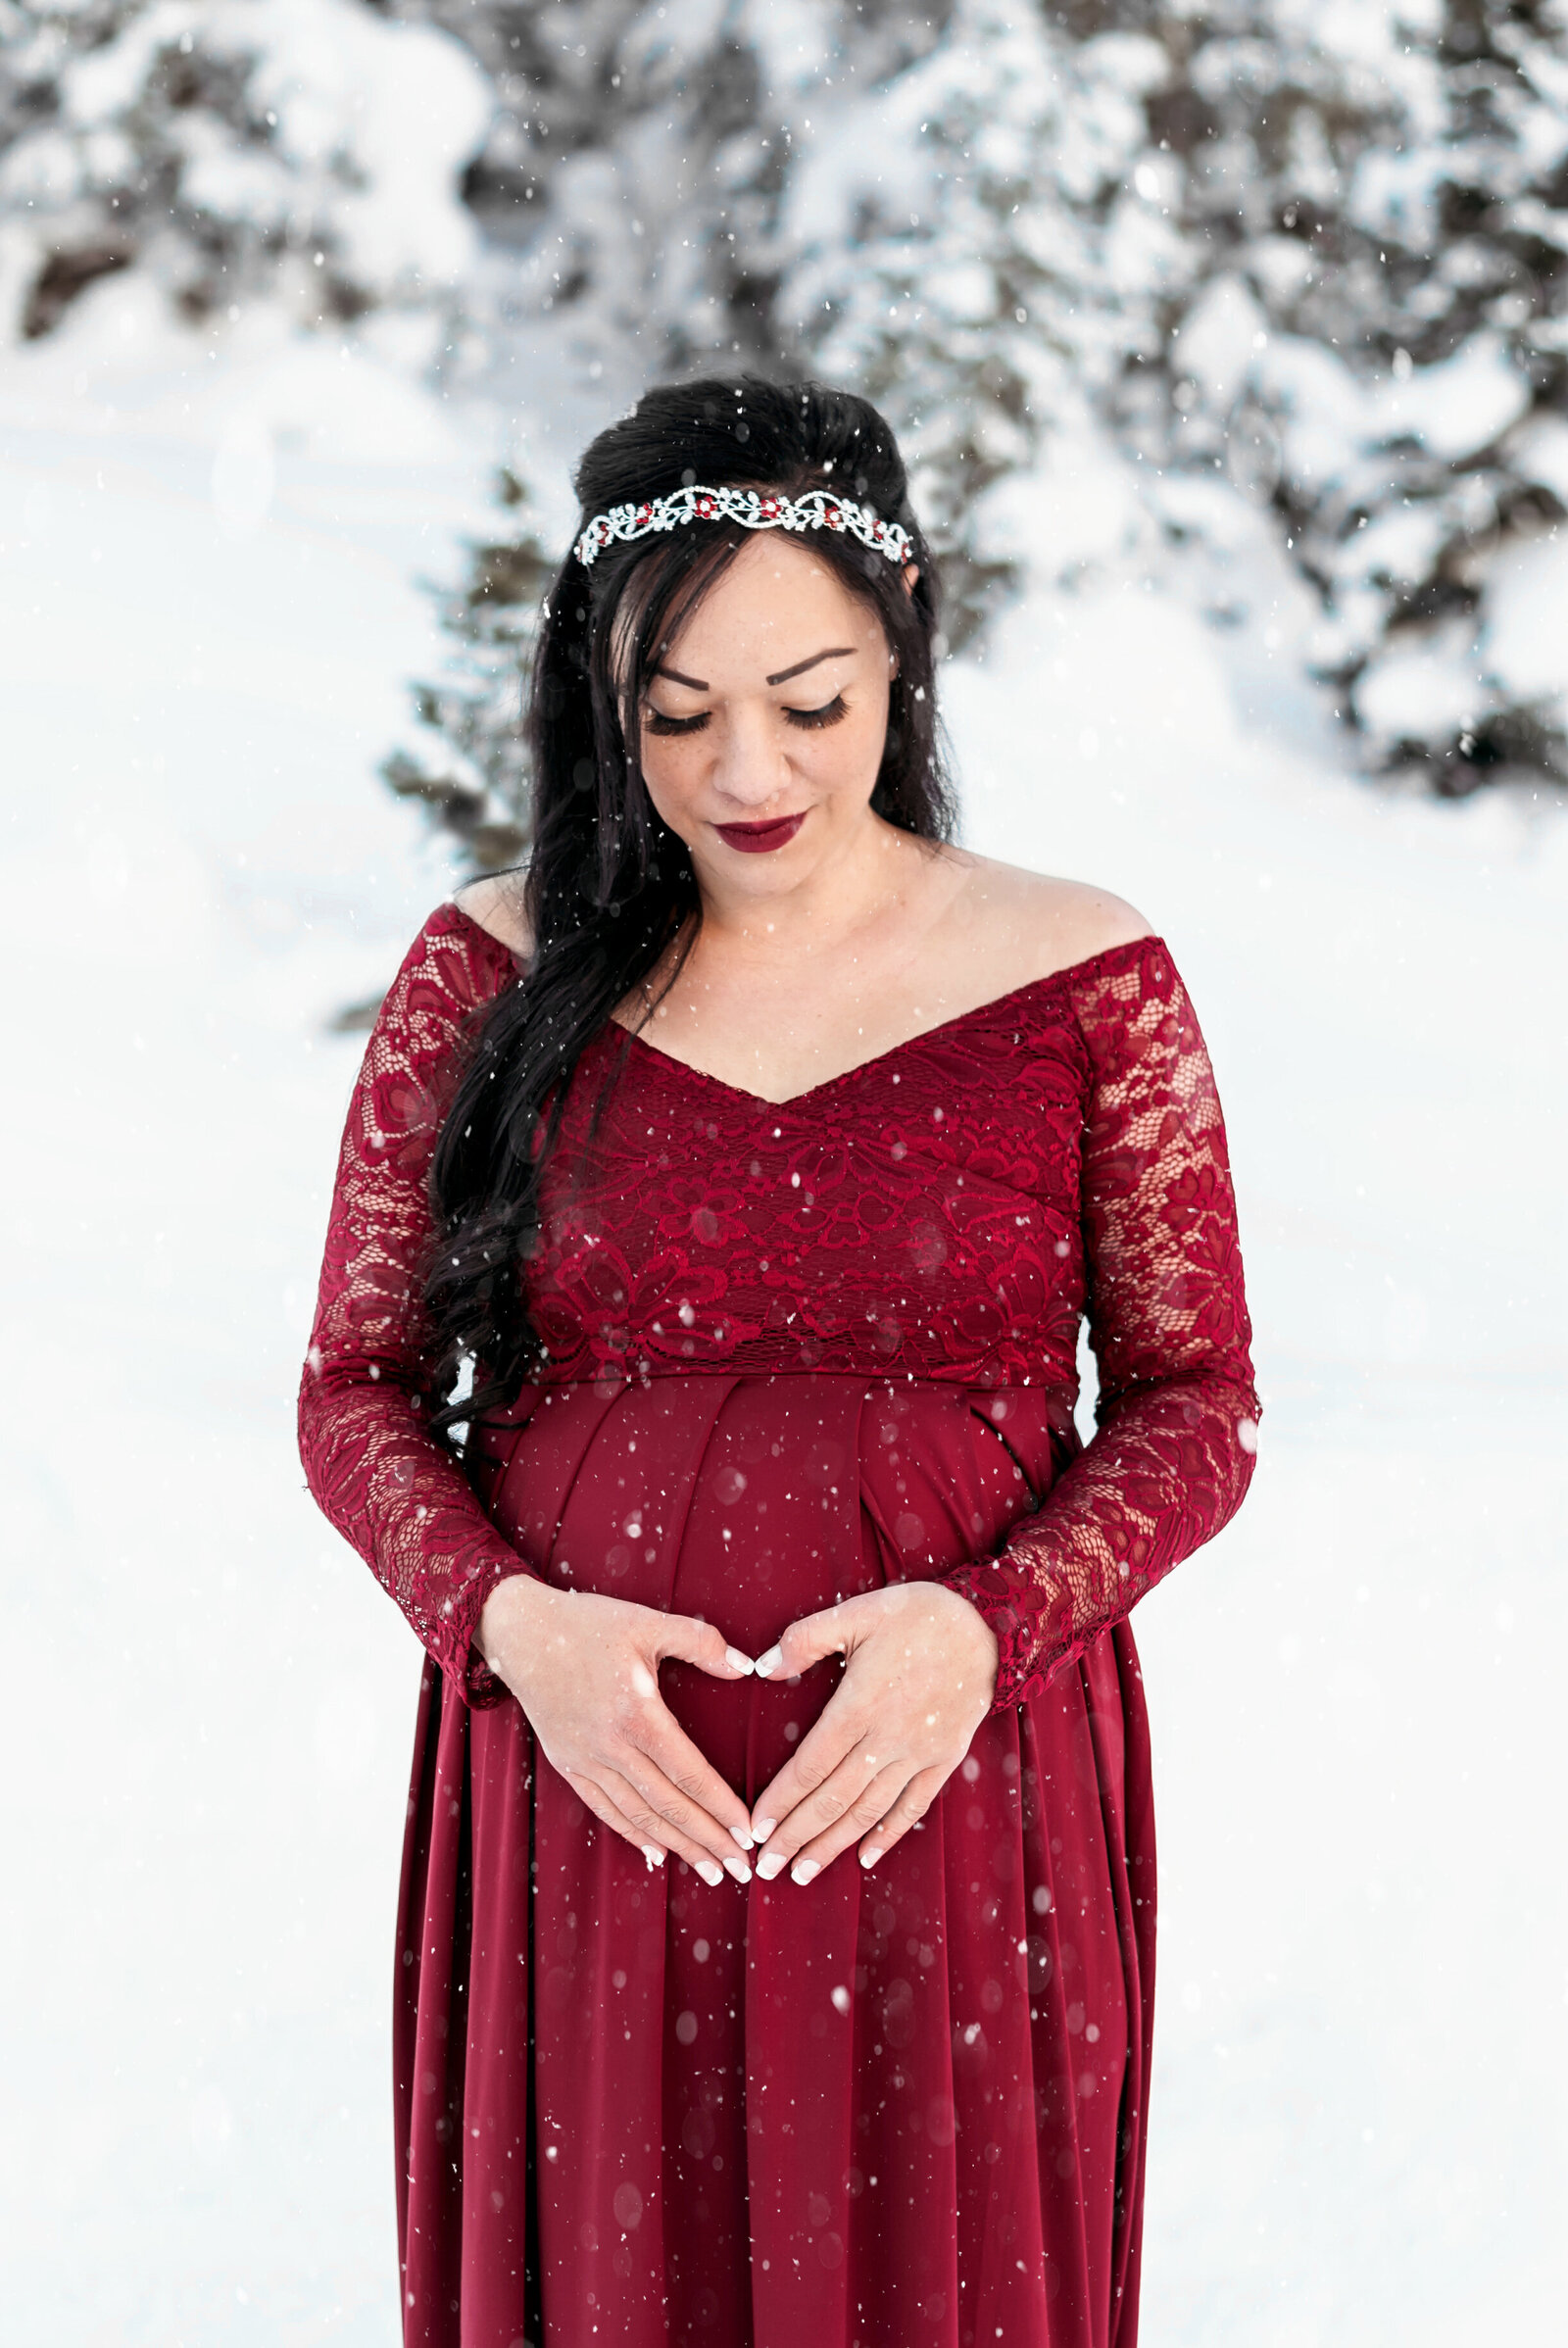 jordan pines winter maternity photo ideas